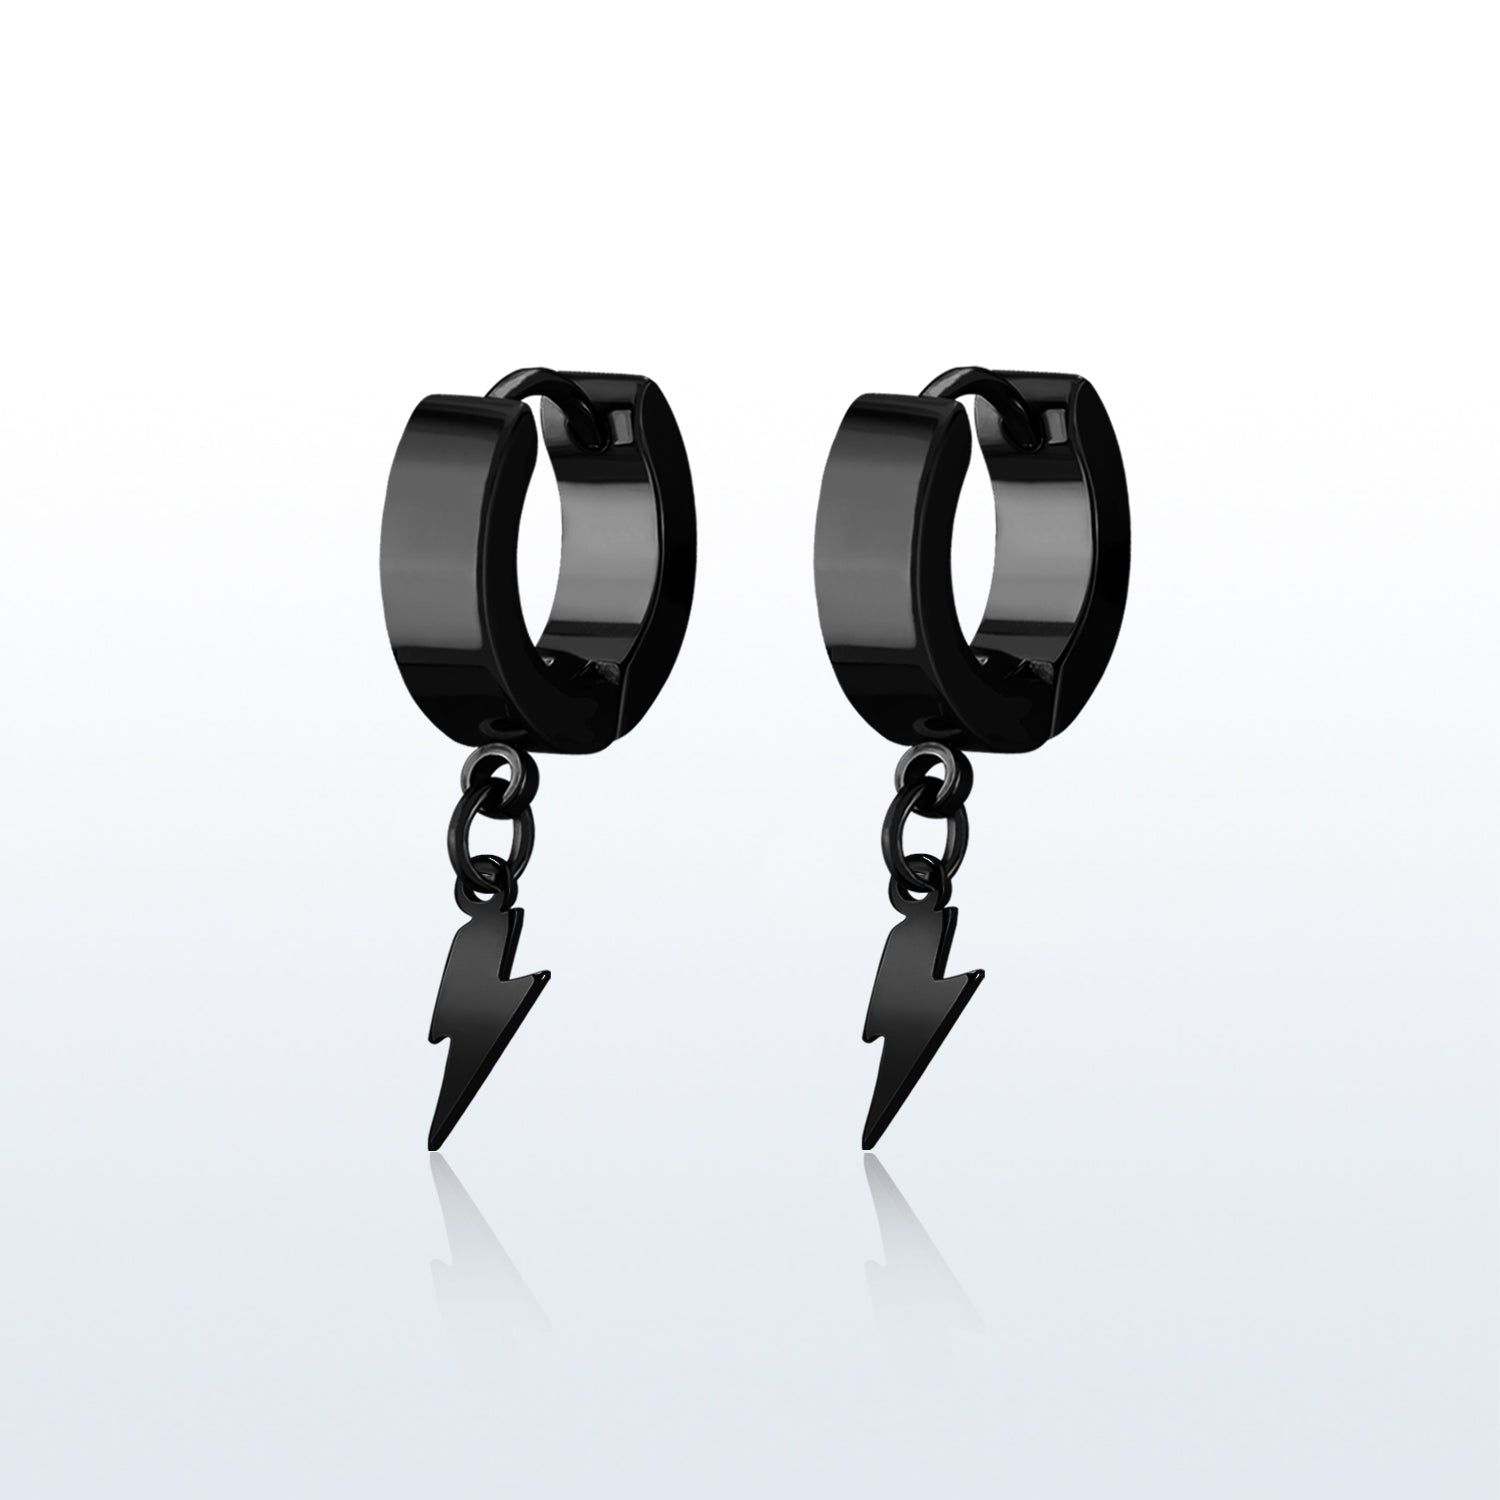 Pair of Black Stainless Steel Huggie Earrings with a Dangling Plain Steel Lightning Bolt